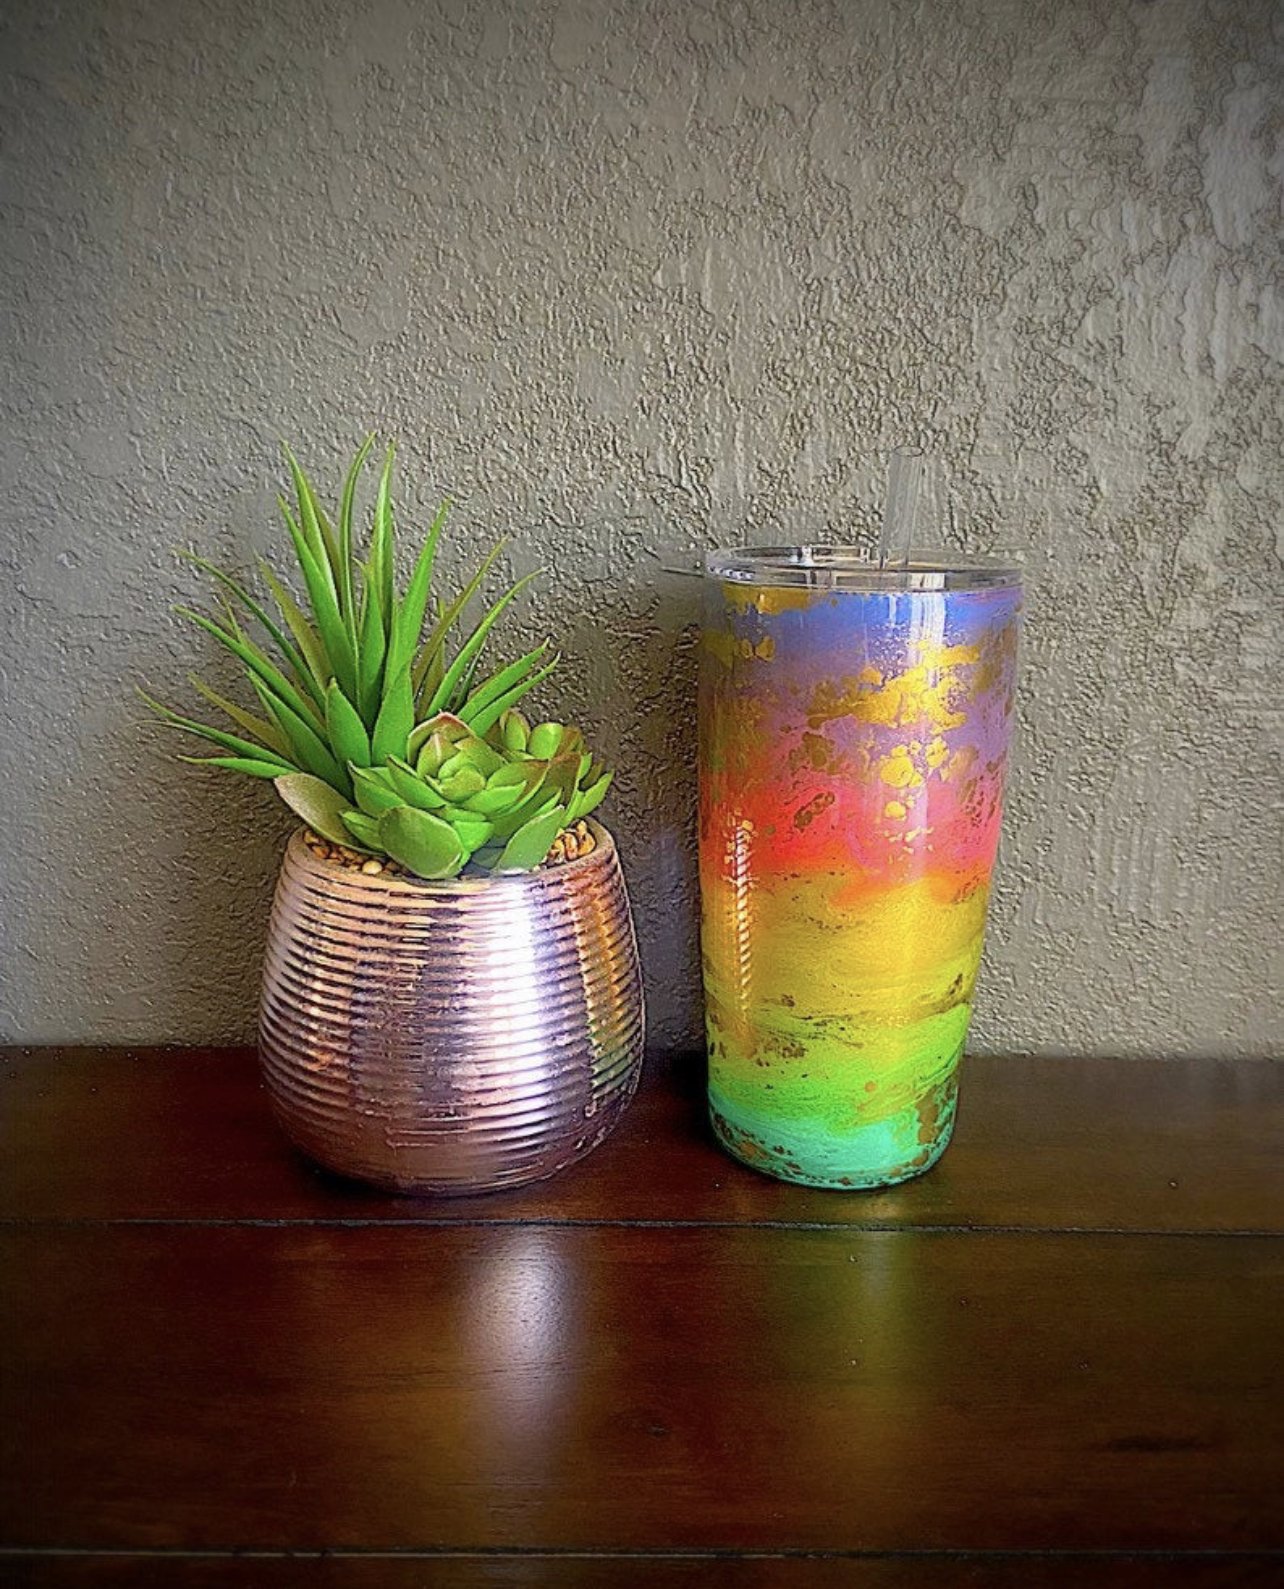 12 Colors Rainbow Rhinestones Kit – One Stop Cups